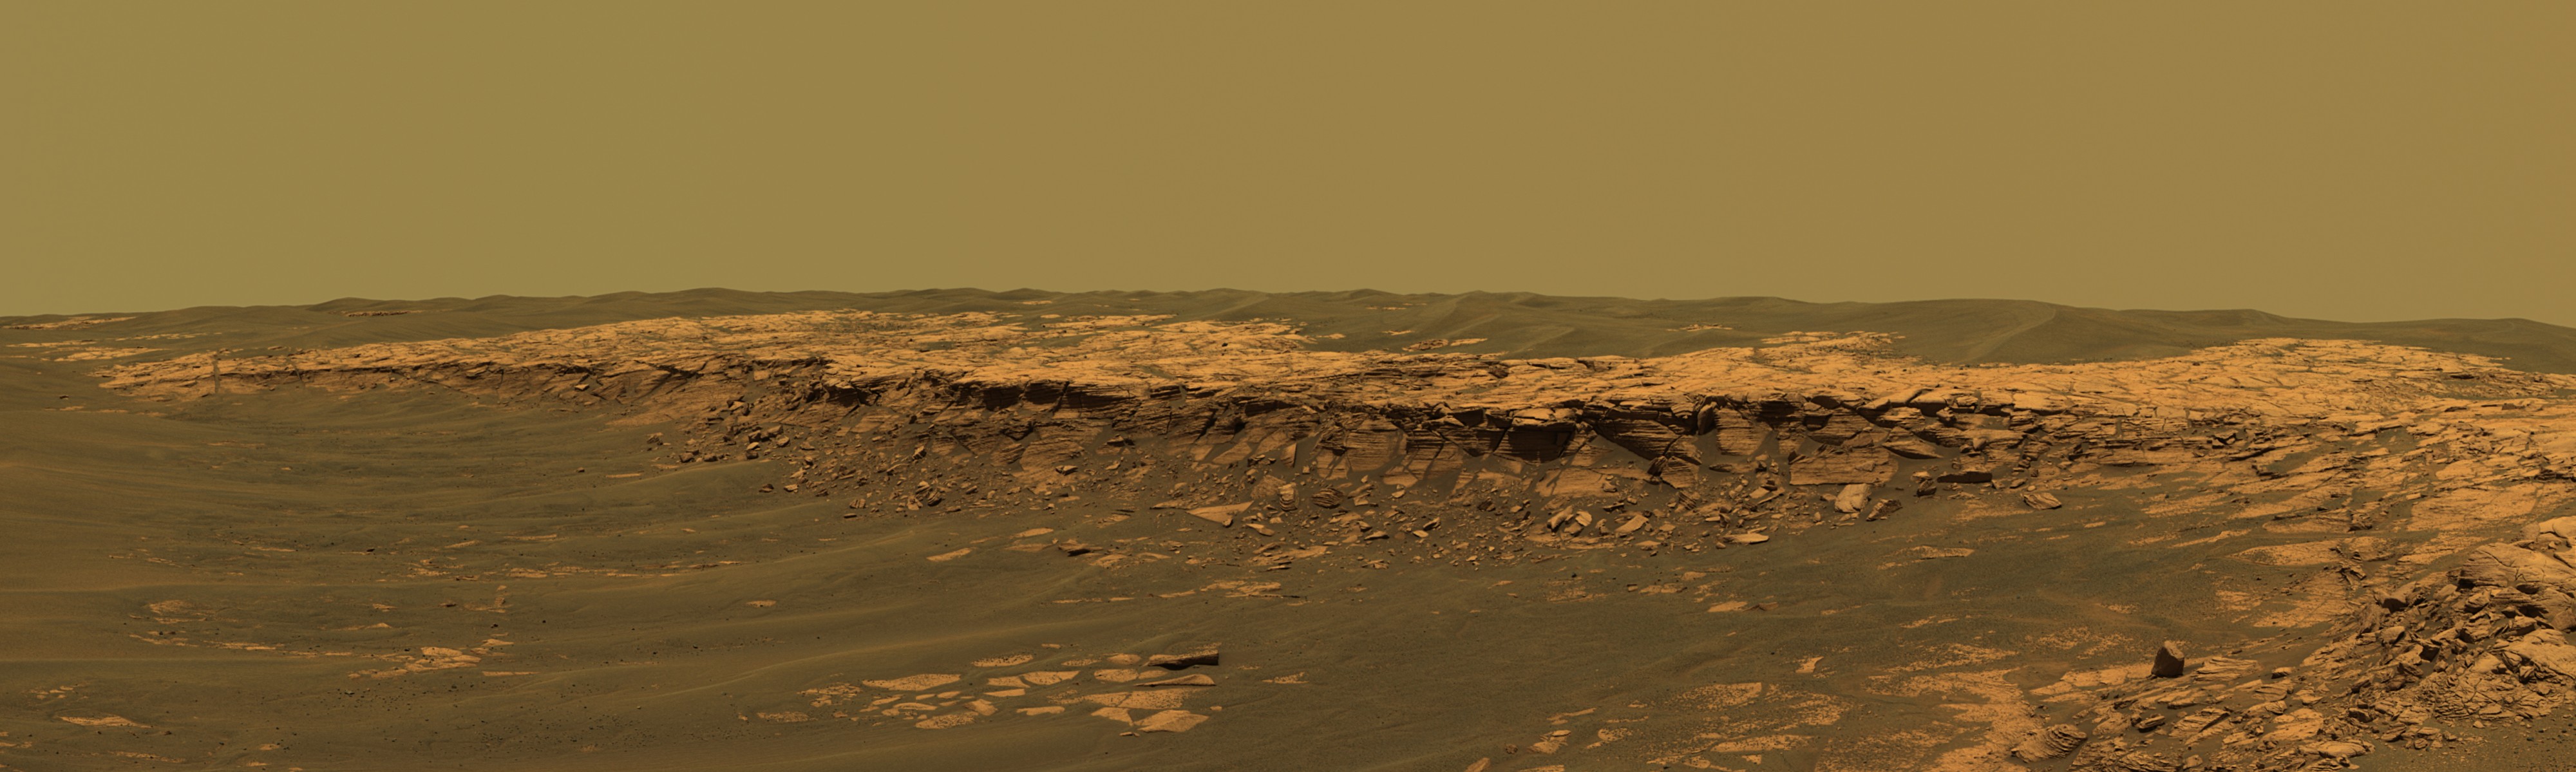 Payson Ridge, Erebus Crater, Mars Opportunity Rover